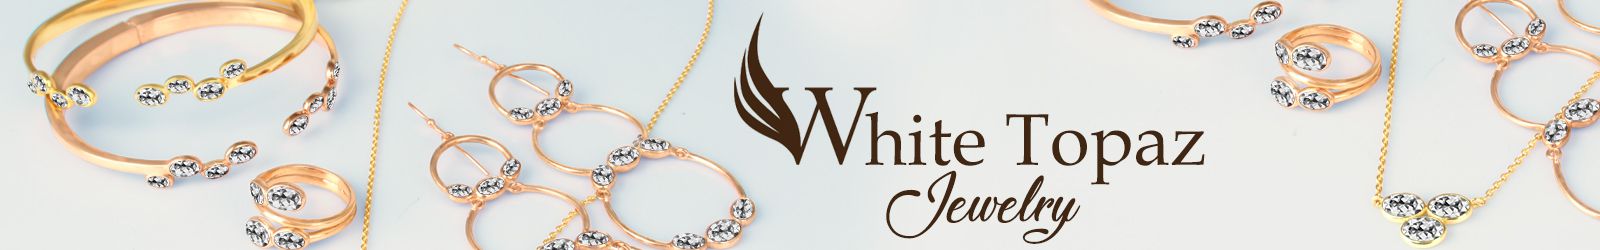 Silver White Topaz Jewelry Wholesale Supplier